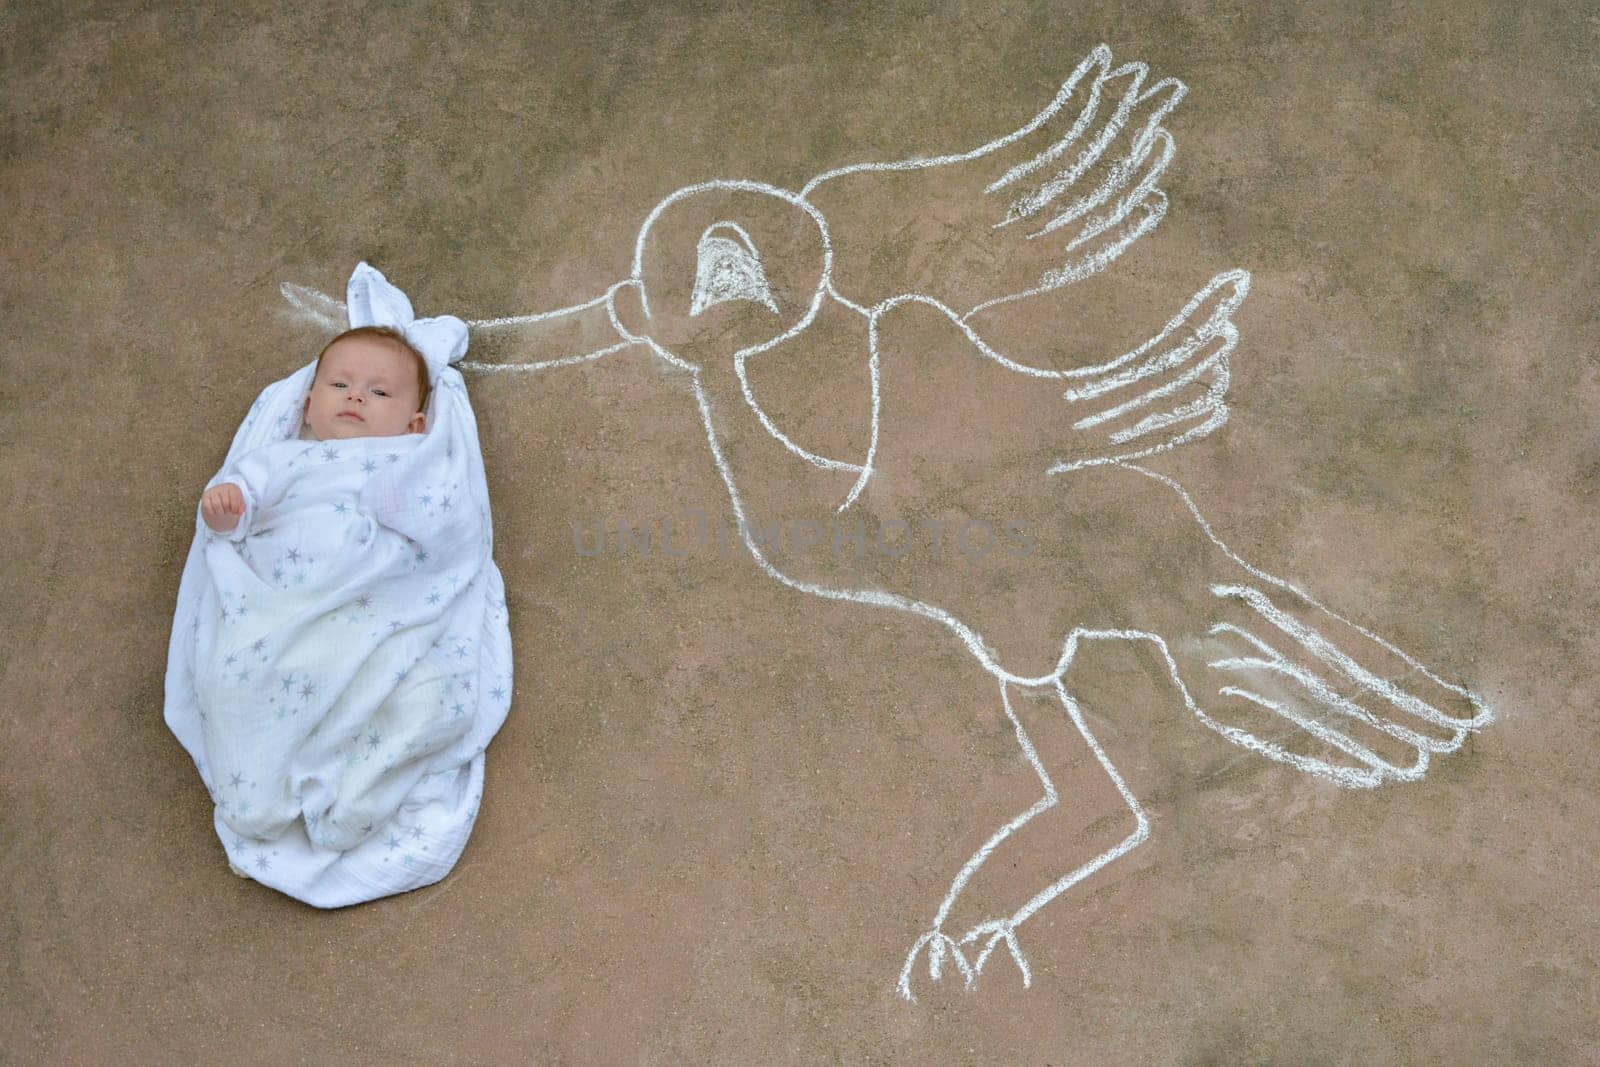 Stork holding a newborn baby in a white blanket by Godi